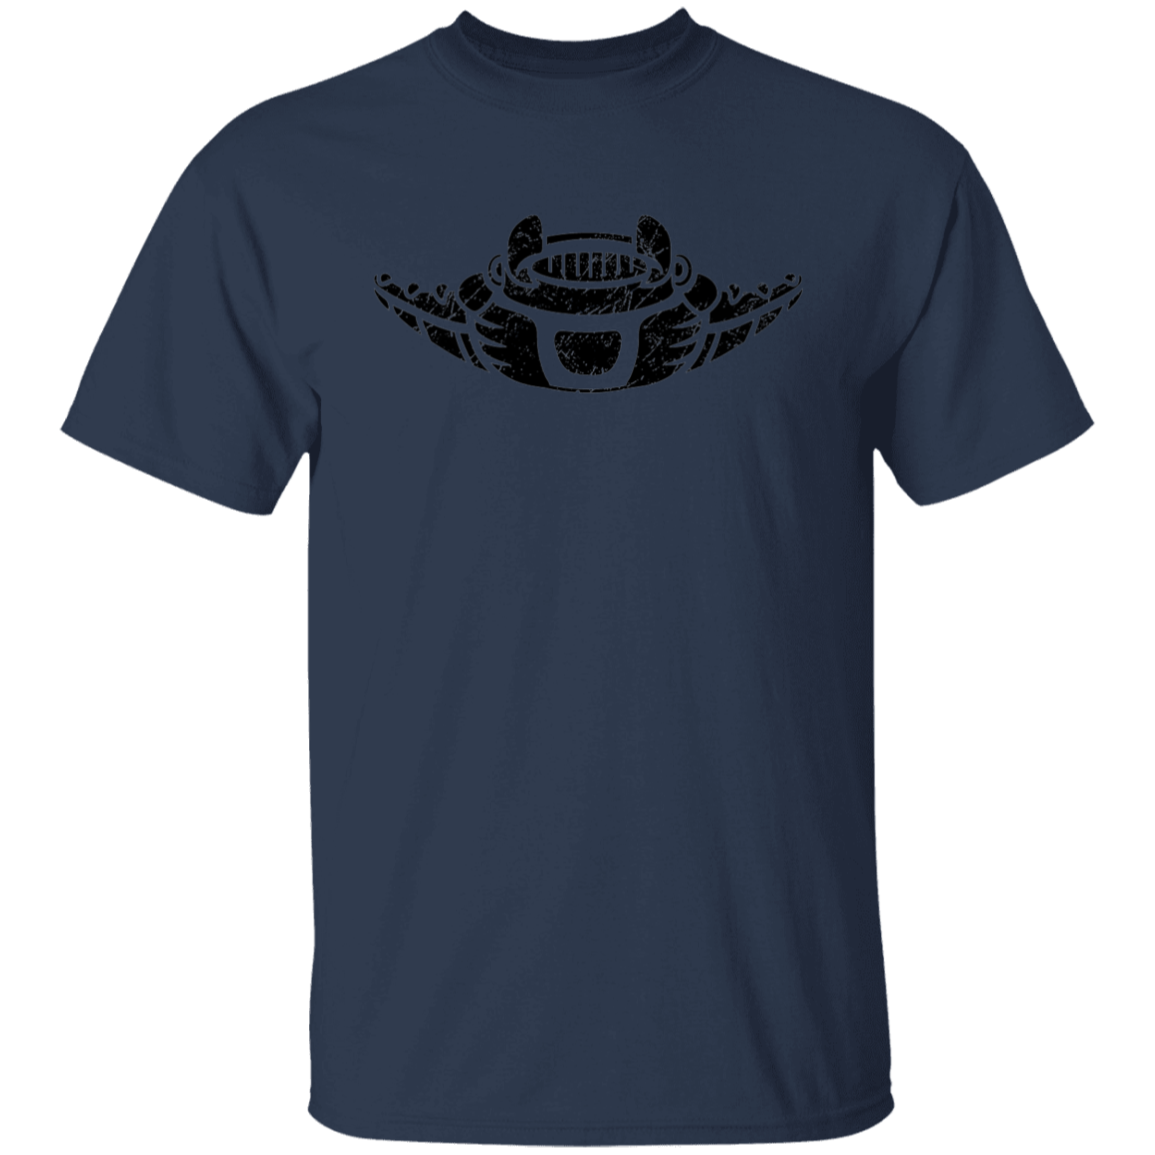 Black Distressed Emblem T-Shirt for Kids (Manta Ray/Glider)